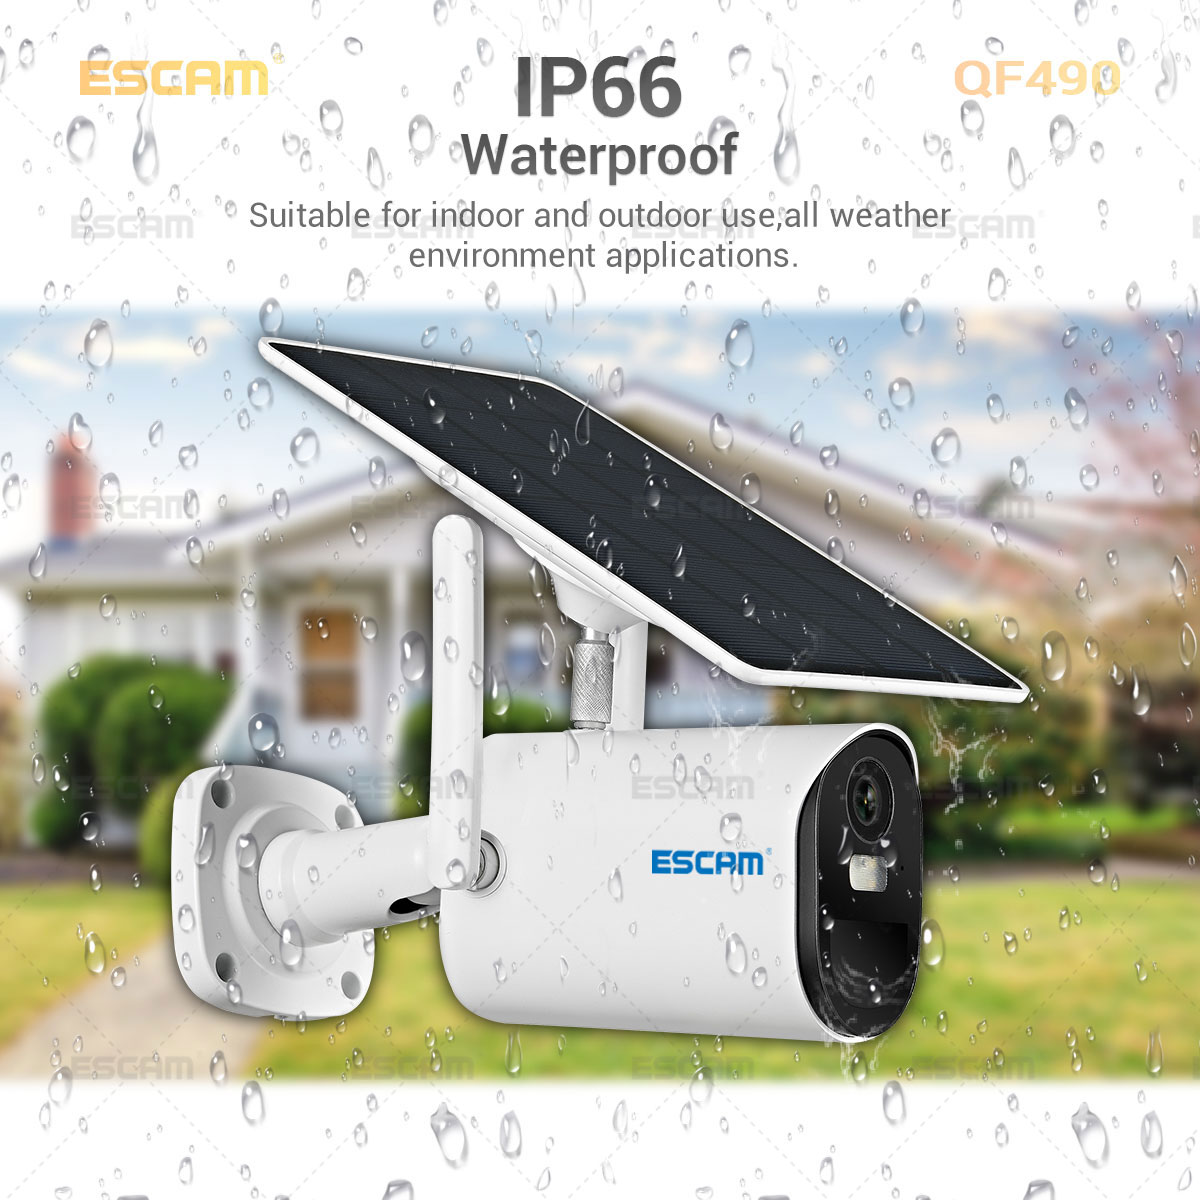 ESCAM QF490 - IP camera with 4G SIM card + solar panel: 1080